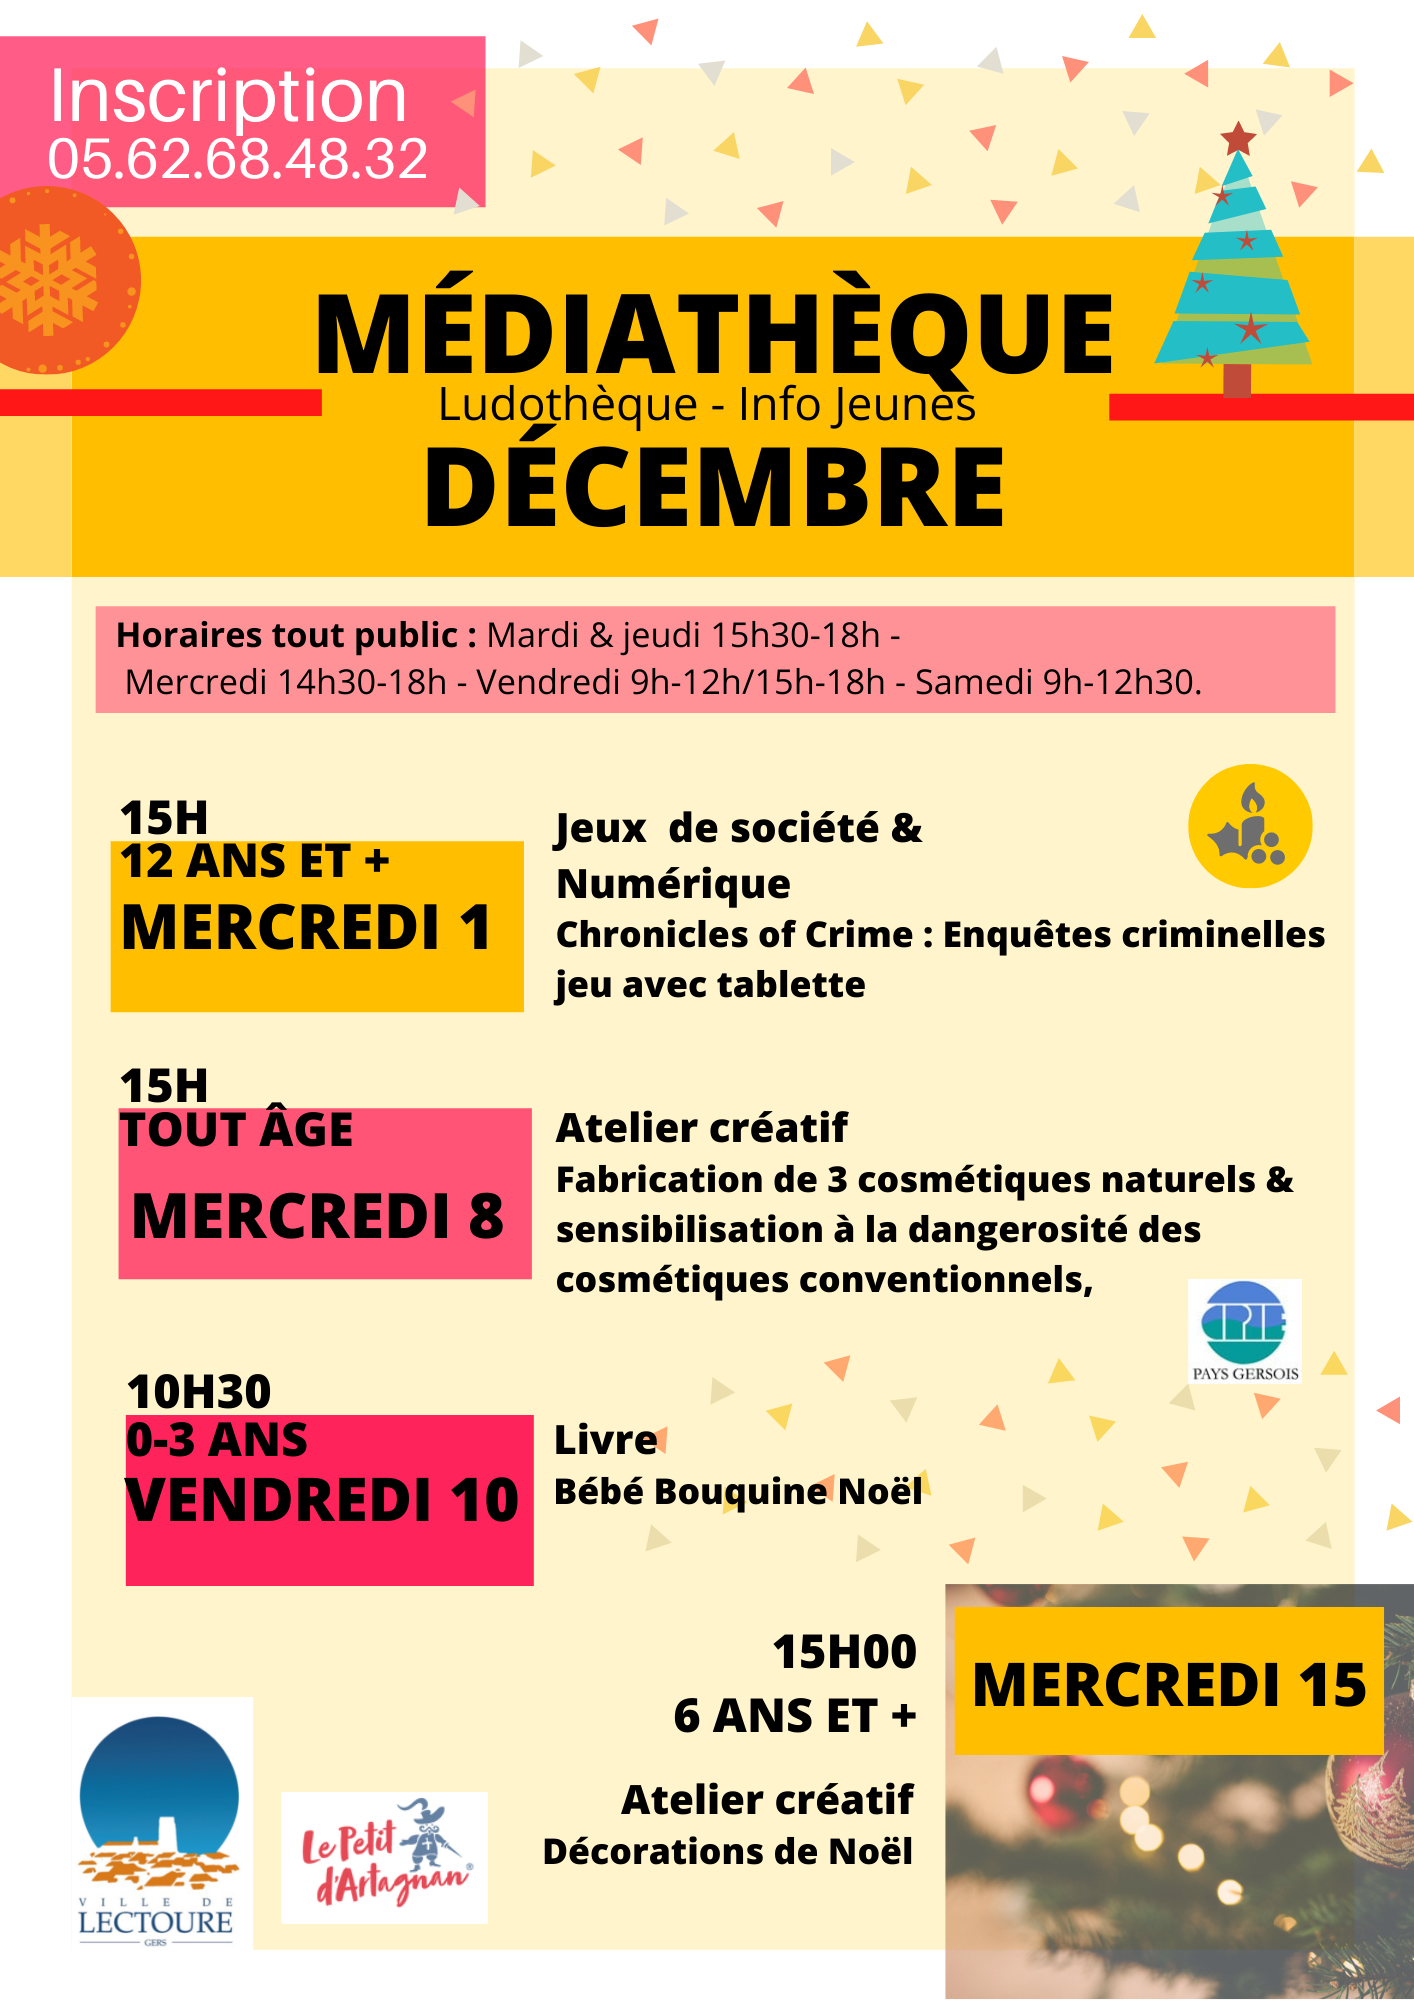 Mediatheque Decembre(1).png